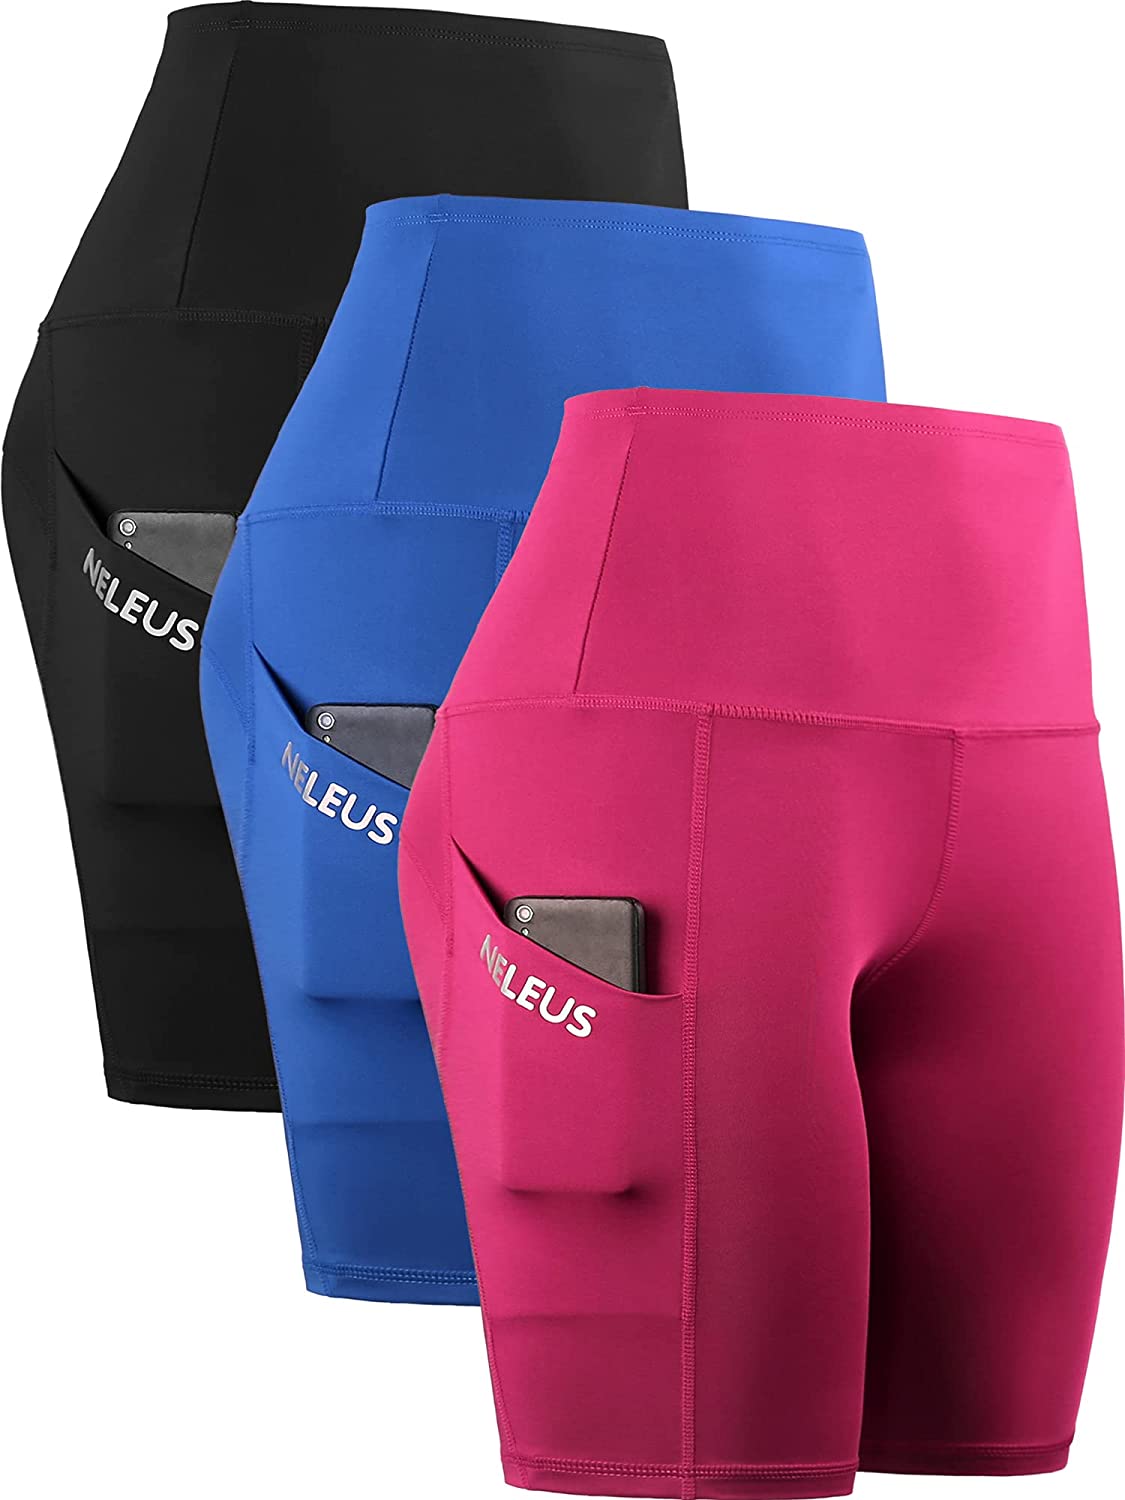 Neleus Womens Workout Compression Yoga Shorts with Pocket